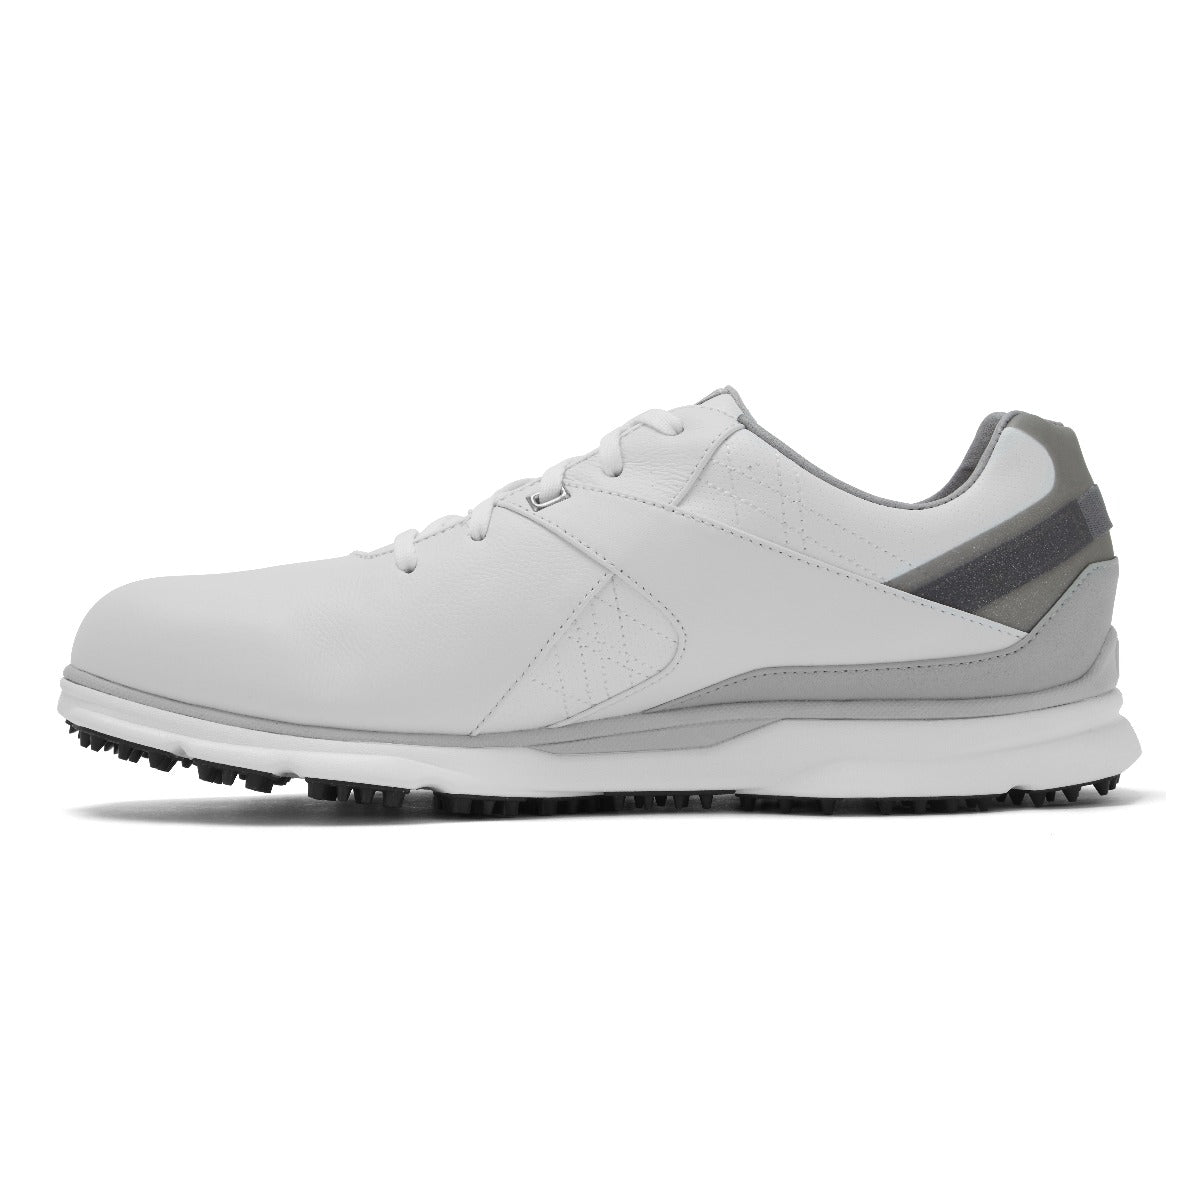 FootJoy Pro SL Golf Shoes 53804